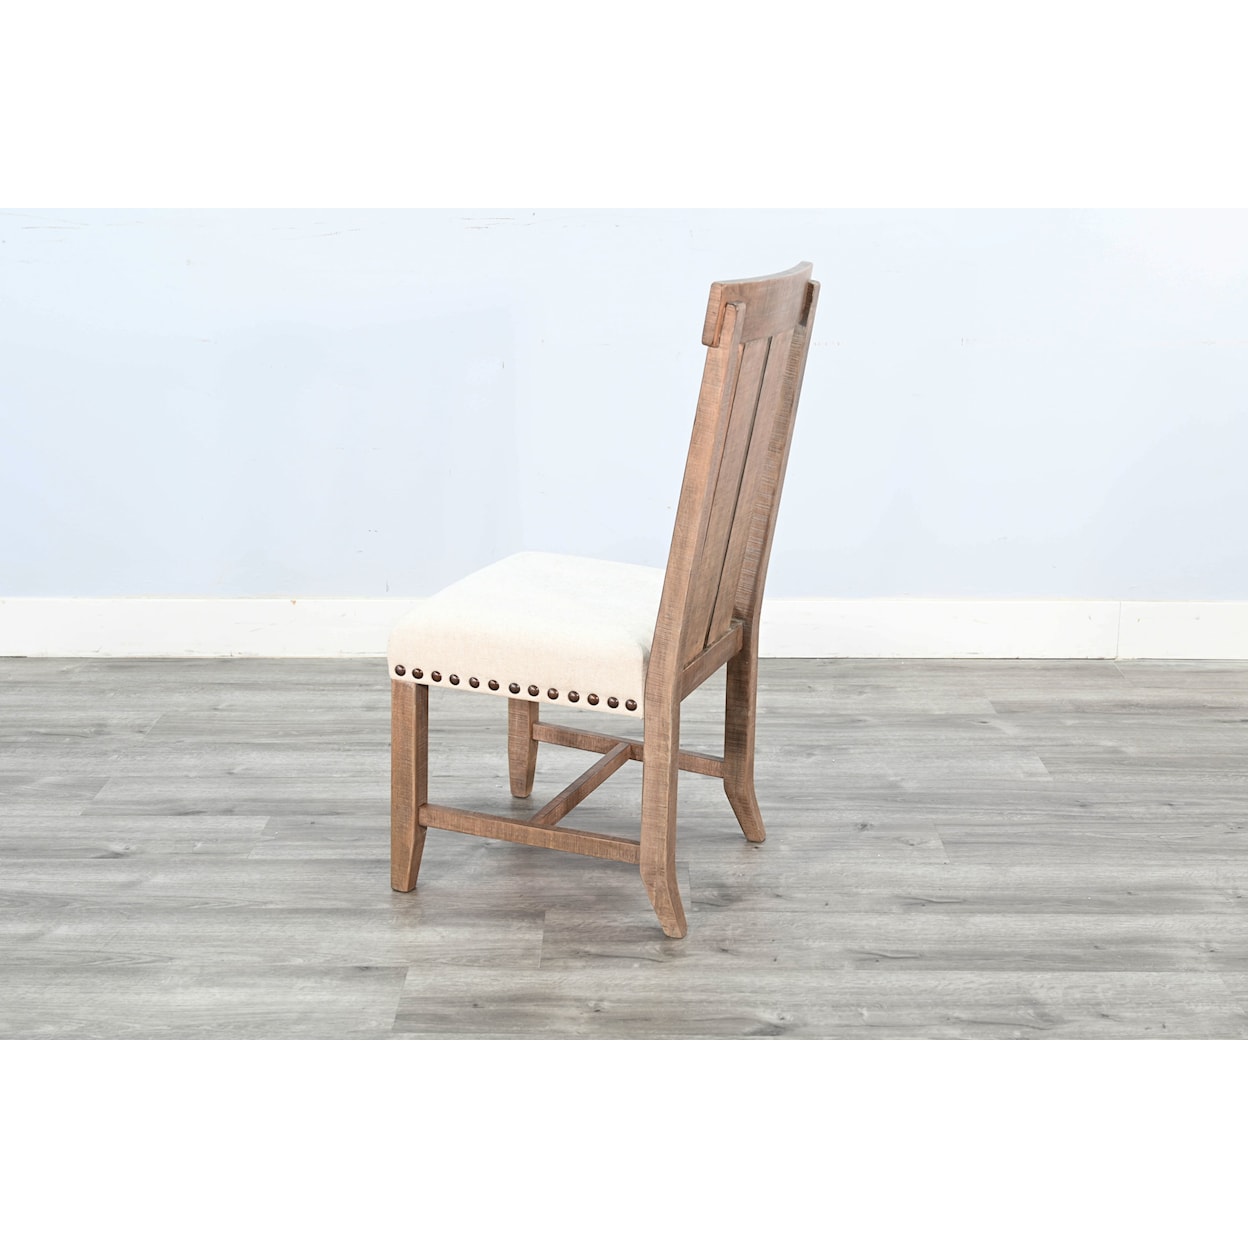 Sunny Designs Vivian Slat Back Chair